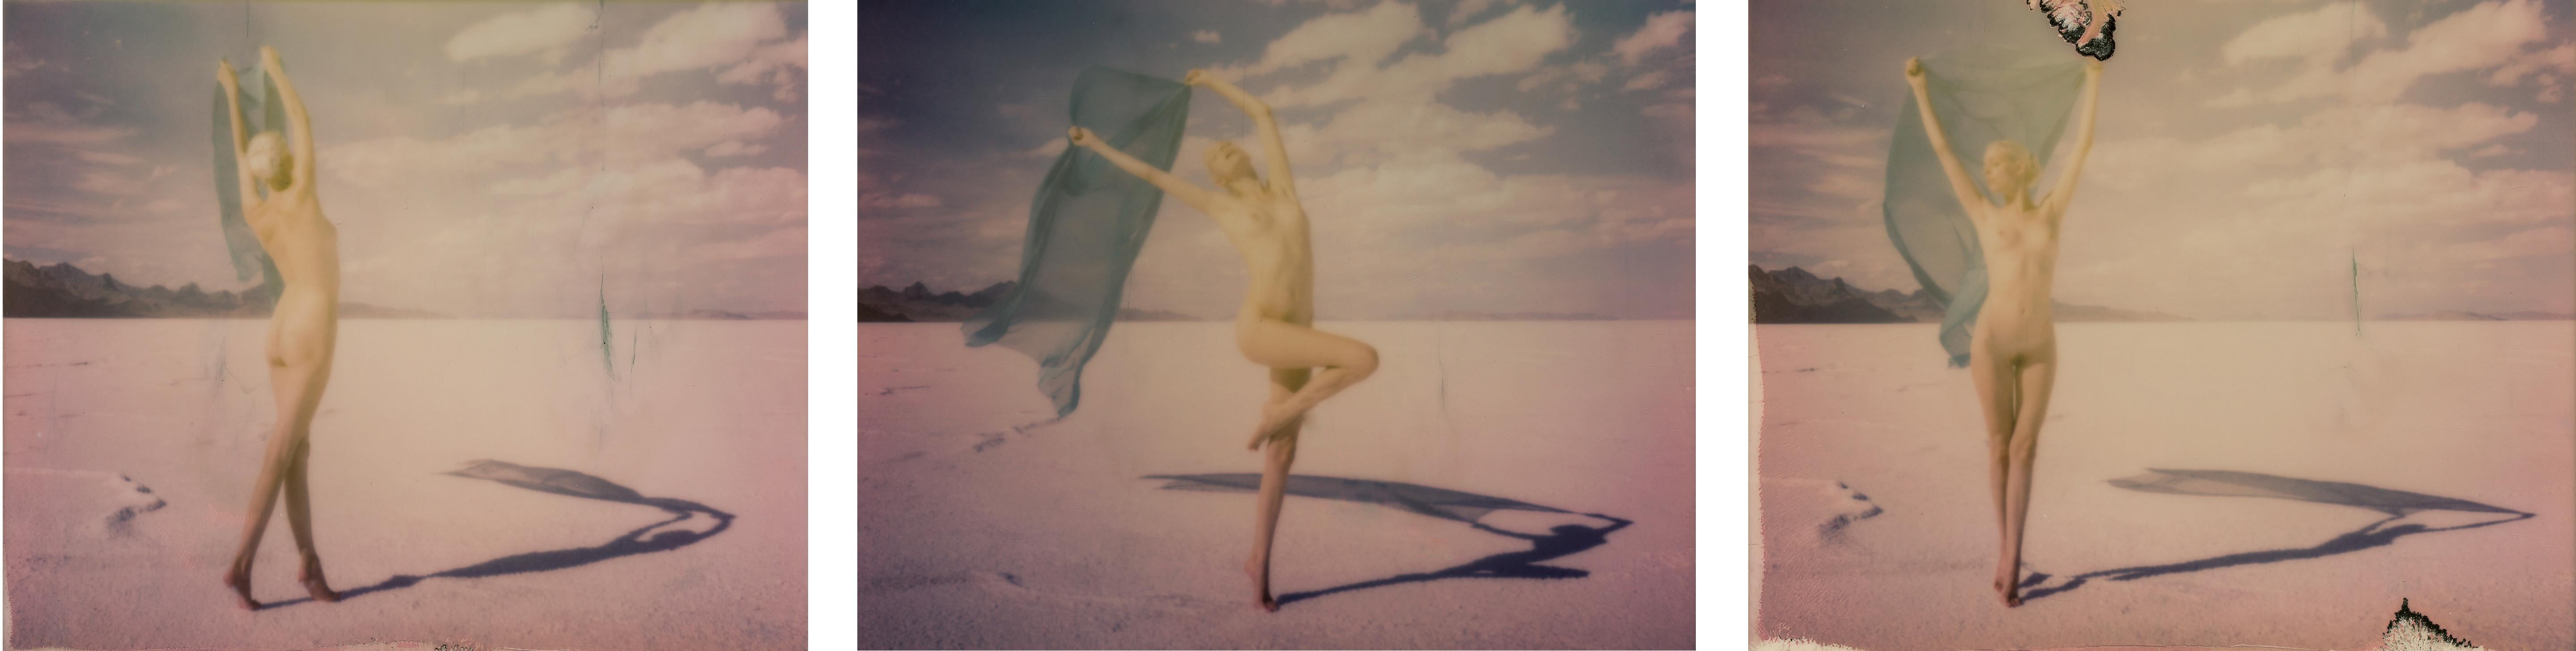 Kirsten Thys van den Audenaerde Figurative Photograph - Shadowplay - triptych - 21st Century, Polaroid, Nude Photography, Contemporary